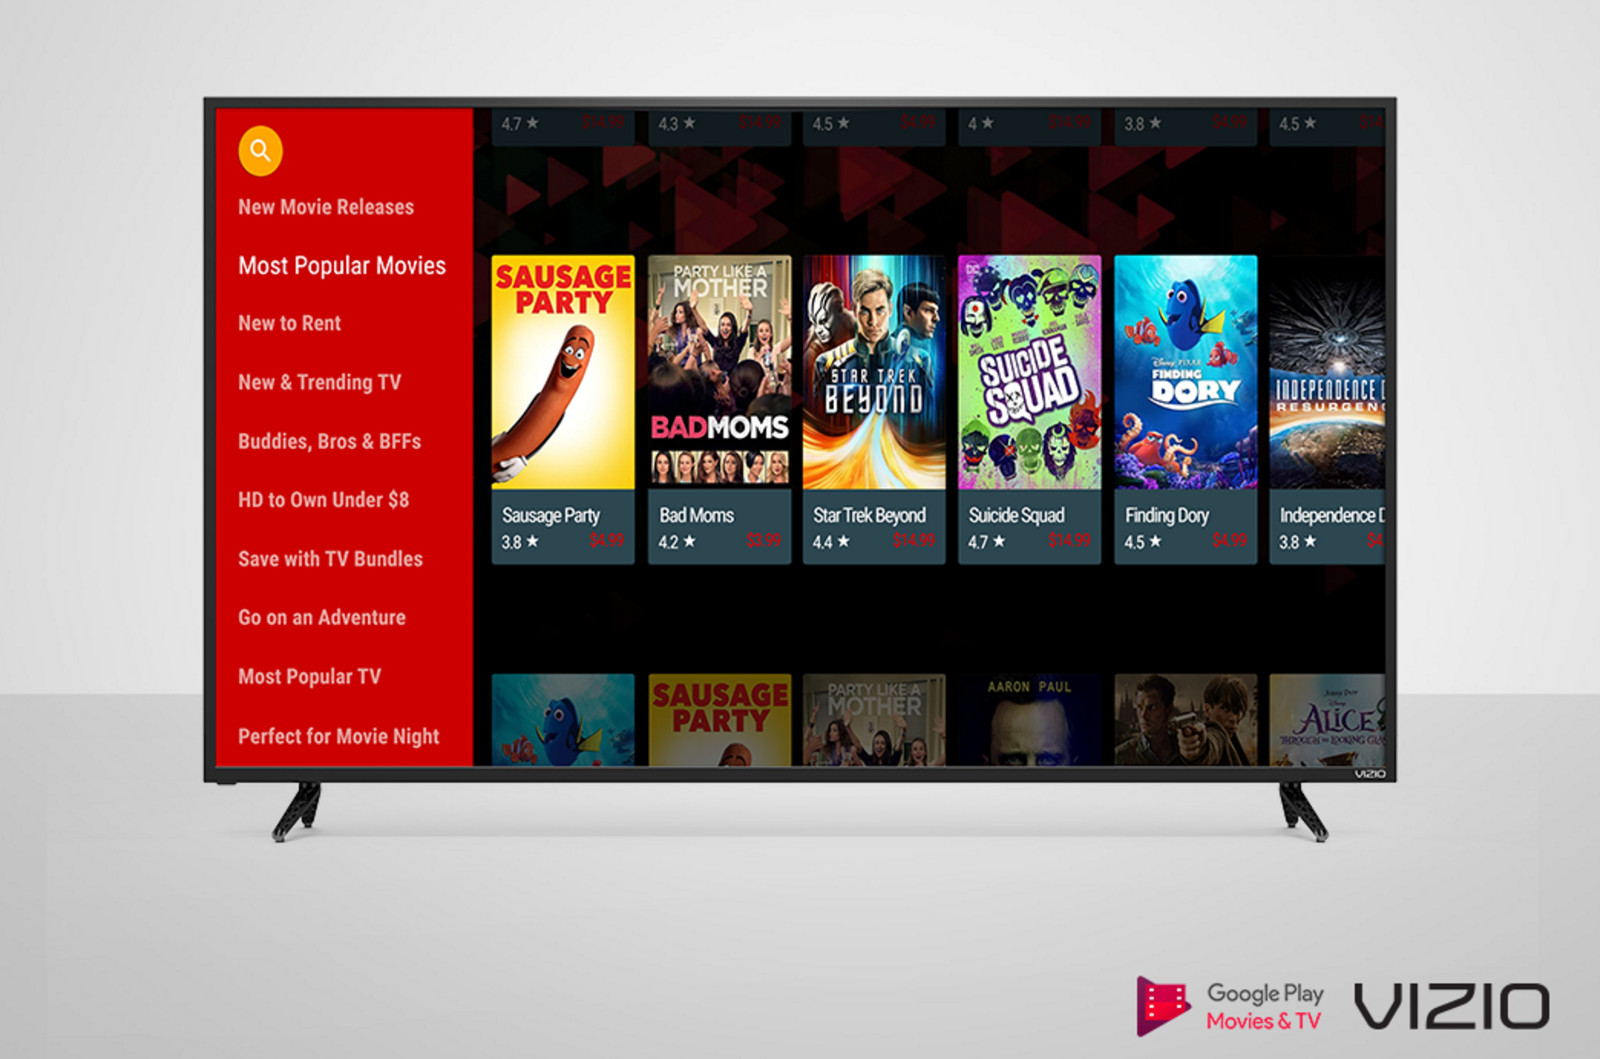 Google Play movies & TV. Google Play Smart TV. Most popular movies.